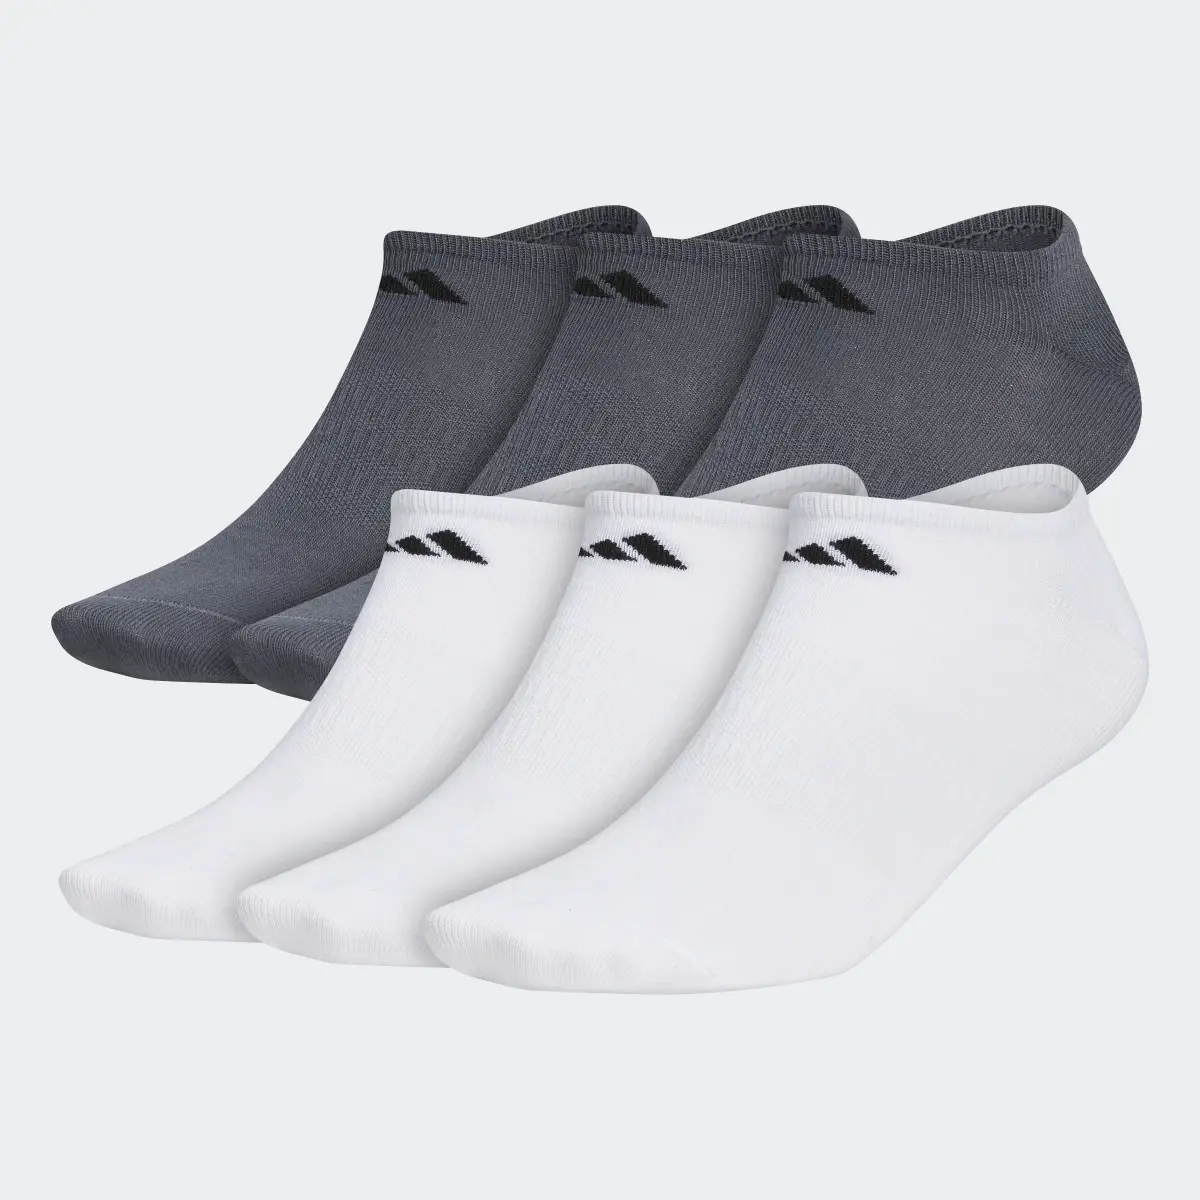 Adidas Superlite No-Show Socks 6 Pairs. 2